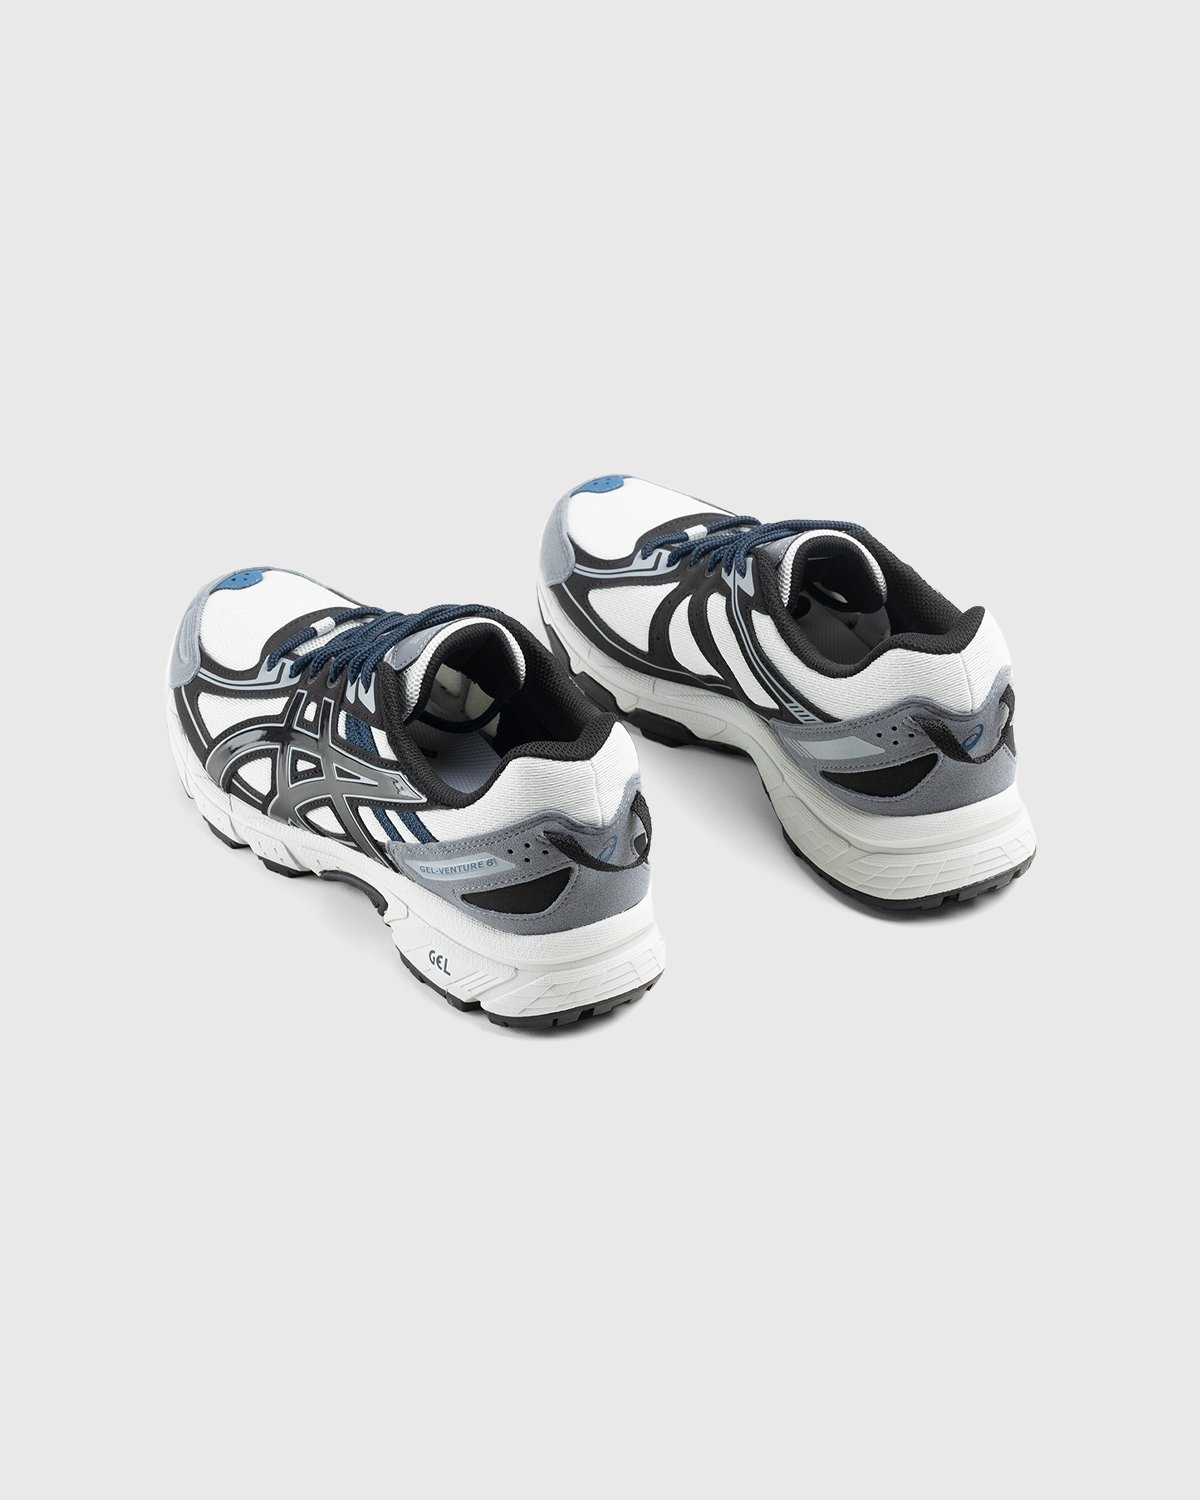 asics – Gel-Venture 6 Glacier Grey Black - Low Top Sneakers - Grey - Image 4